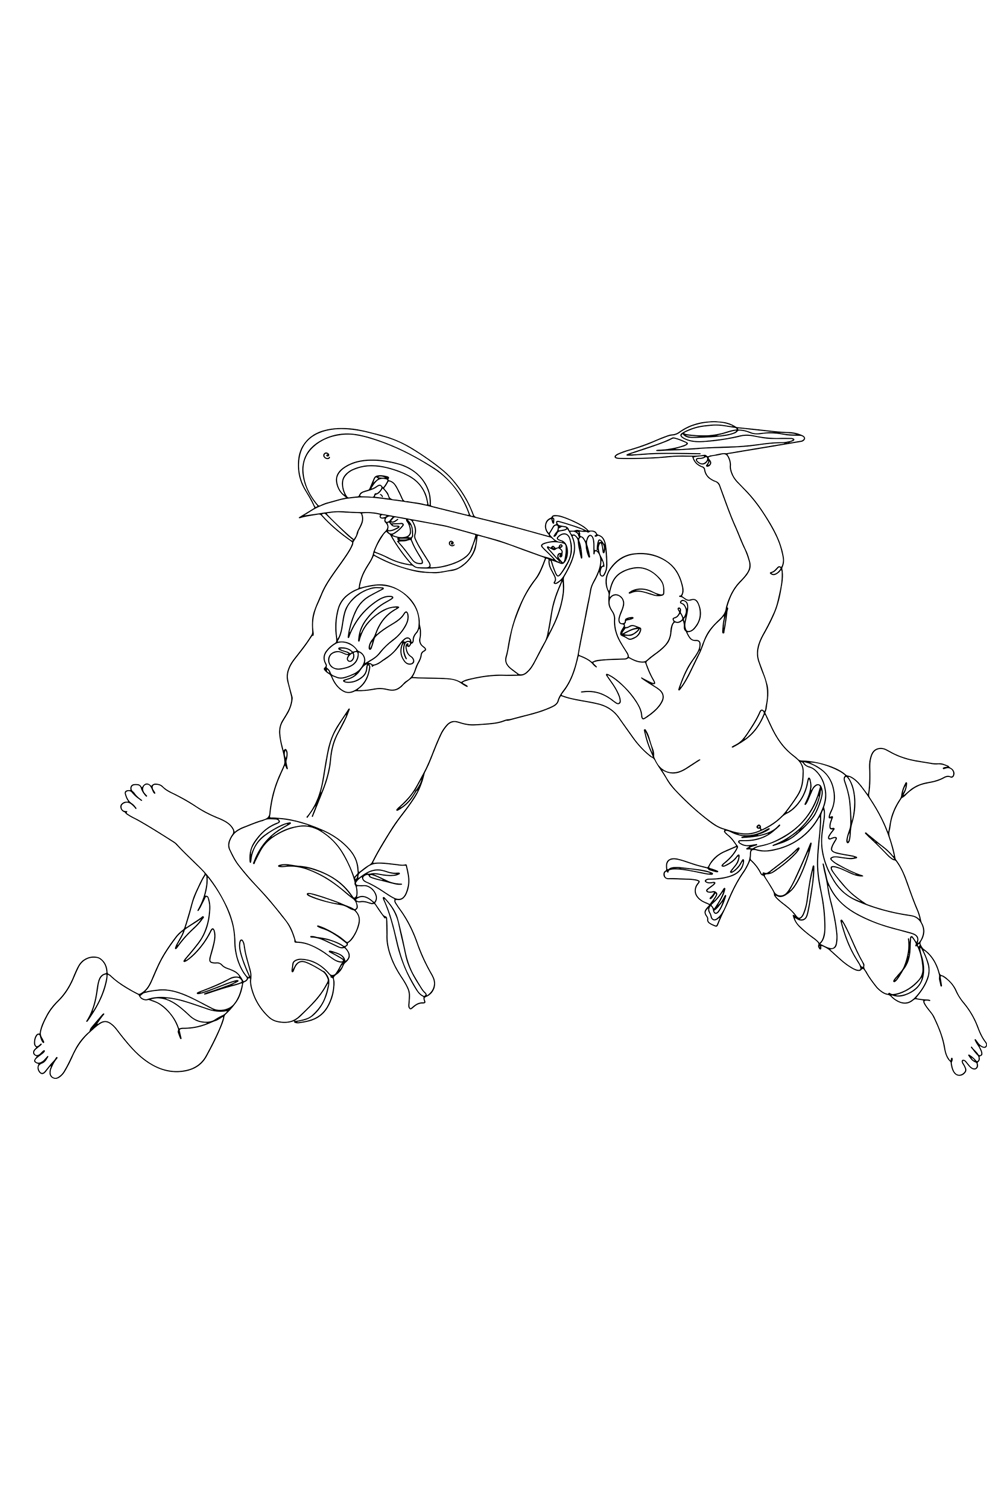 Dynamic Kalarippayat Warriors: One-Line Illustration of Ancient Combat, Tradition Meets Art: Kalarippayat Swordfight in Indian Martial Arts, Kalarippayat Swordfight Sketch pinterest preview image.